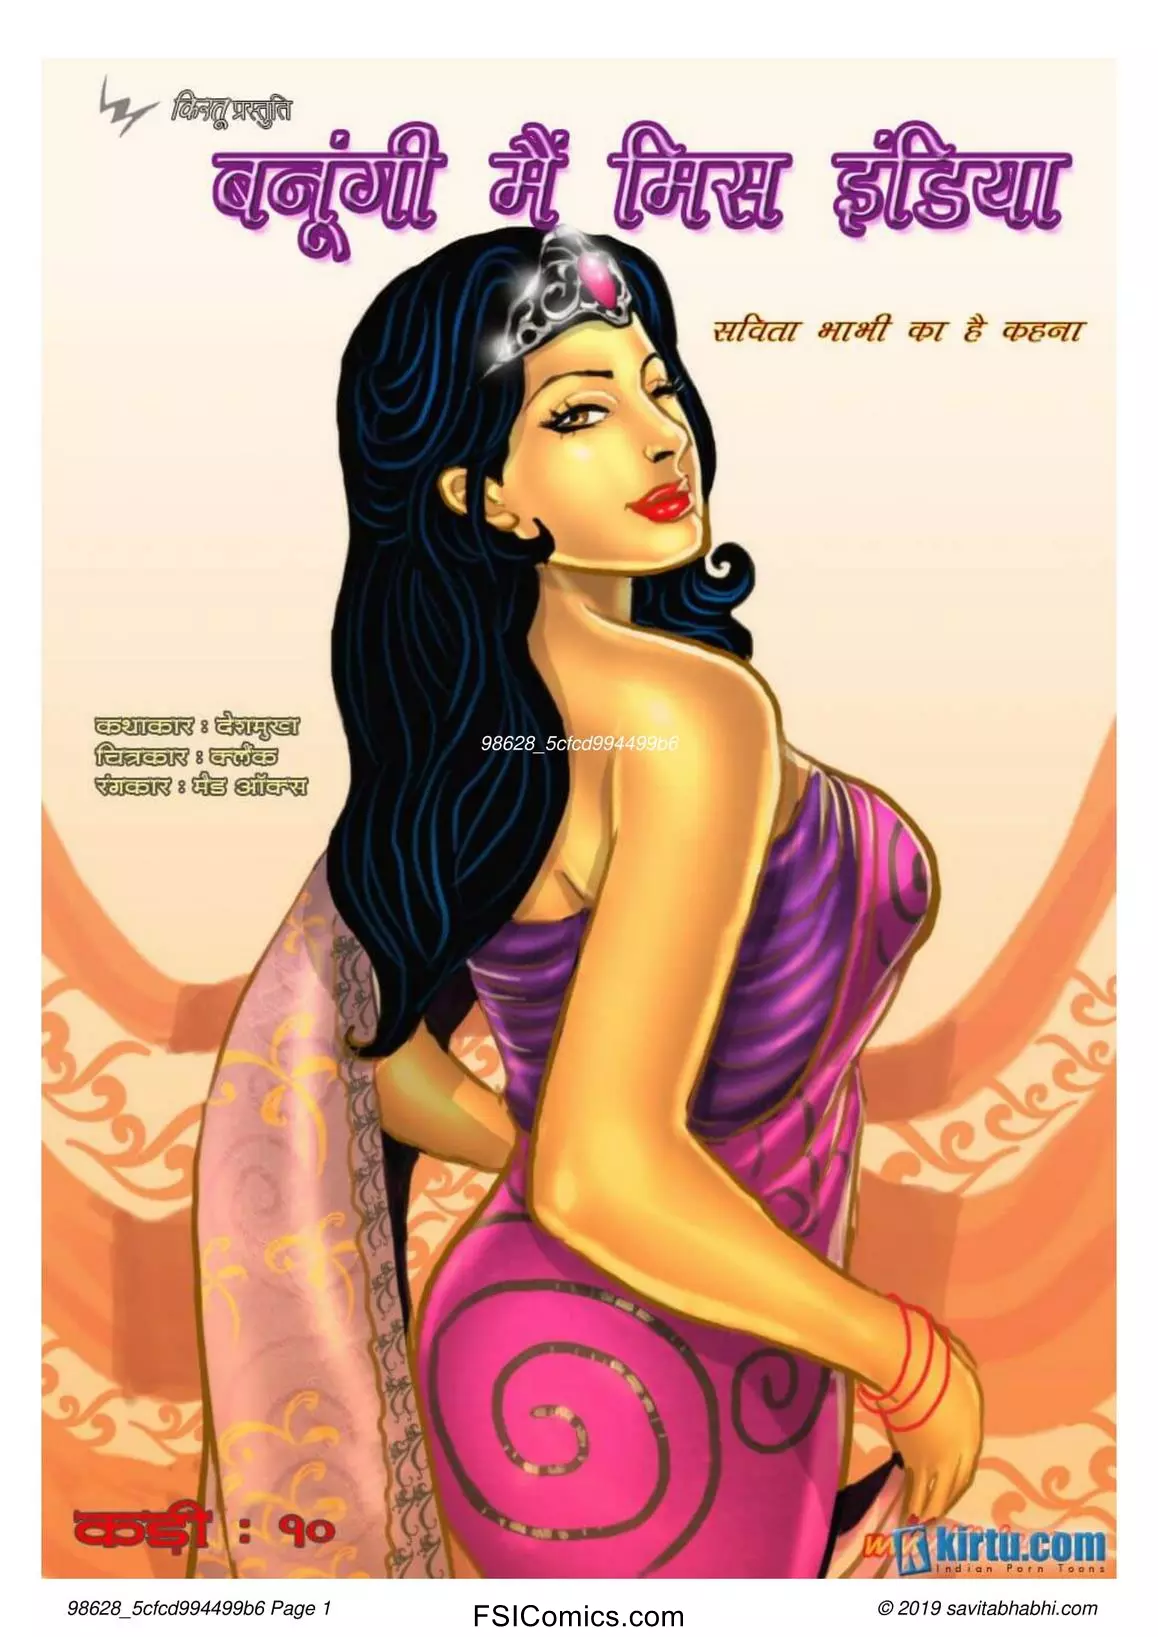 Savita Bhabhi Episode 10 Hindi – Main Banugi Miss India- (मैं बनूँगी मिस इन्डिया) - 27 - FSIComics